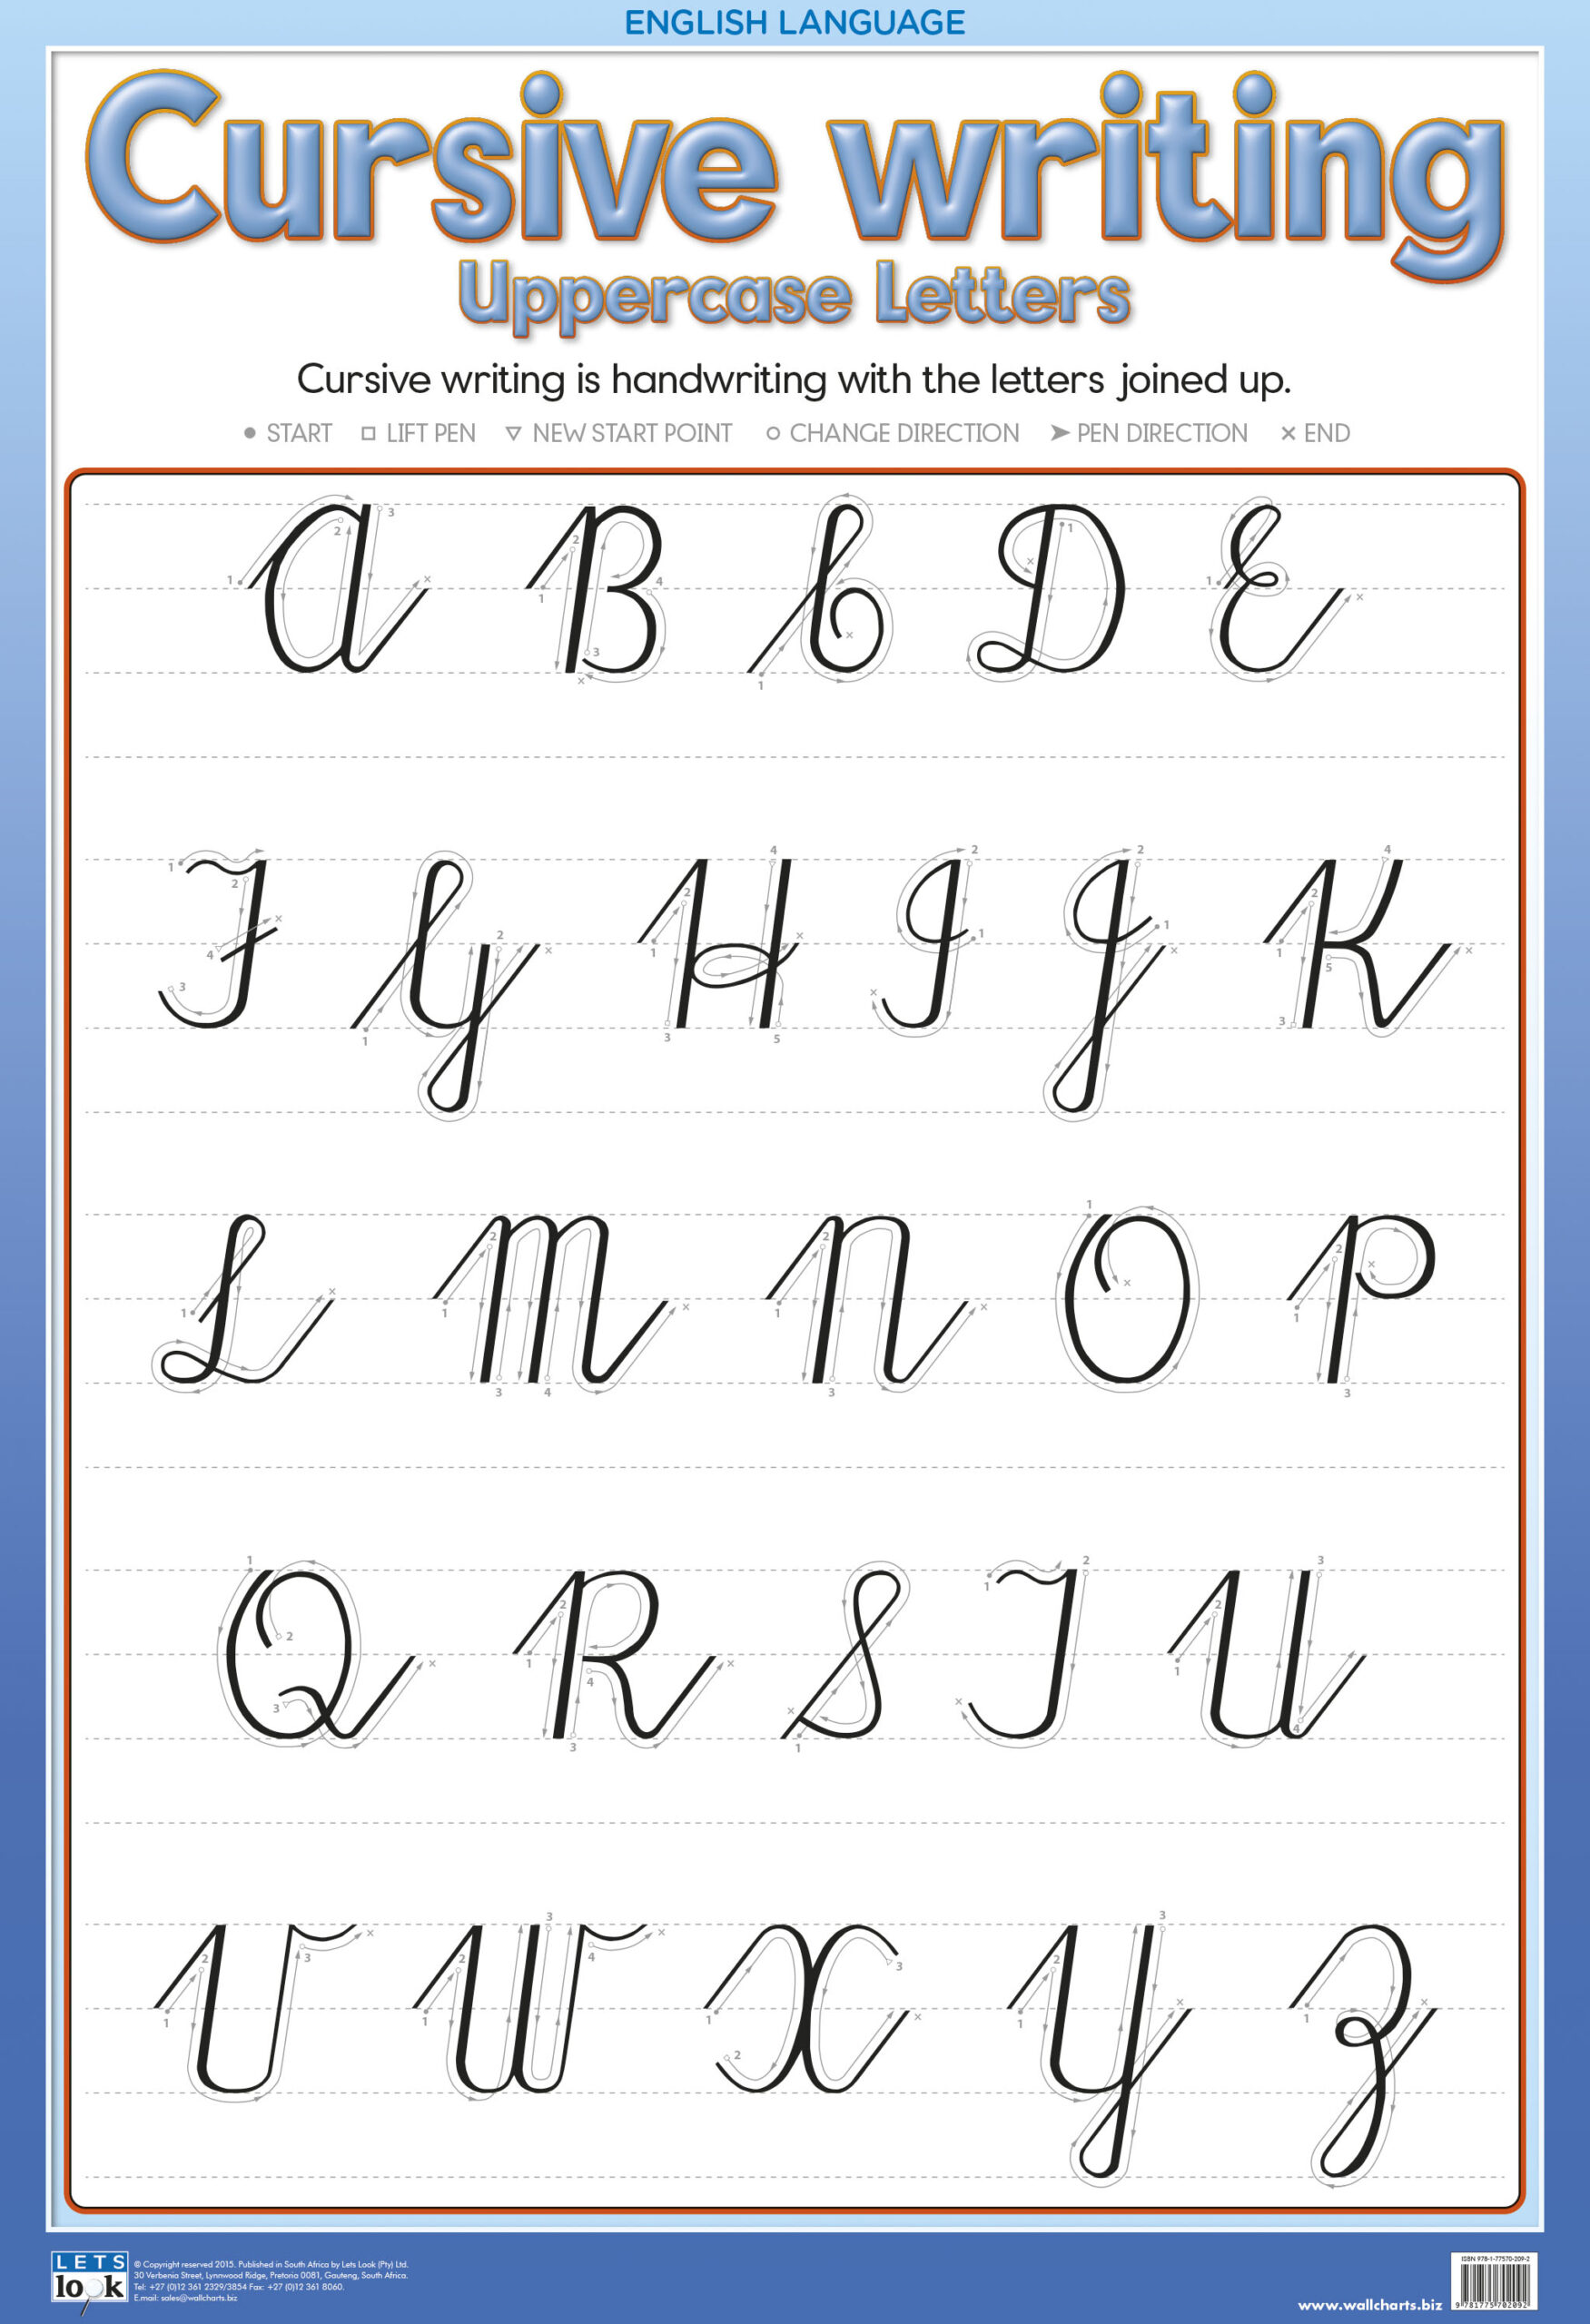 types-of-cursive-writing